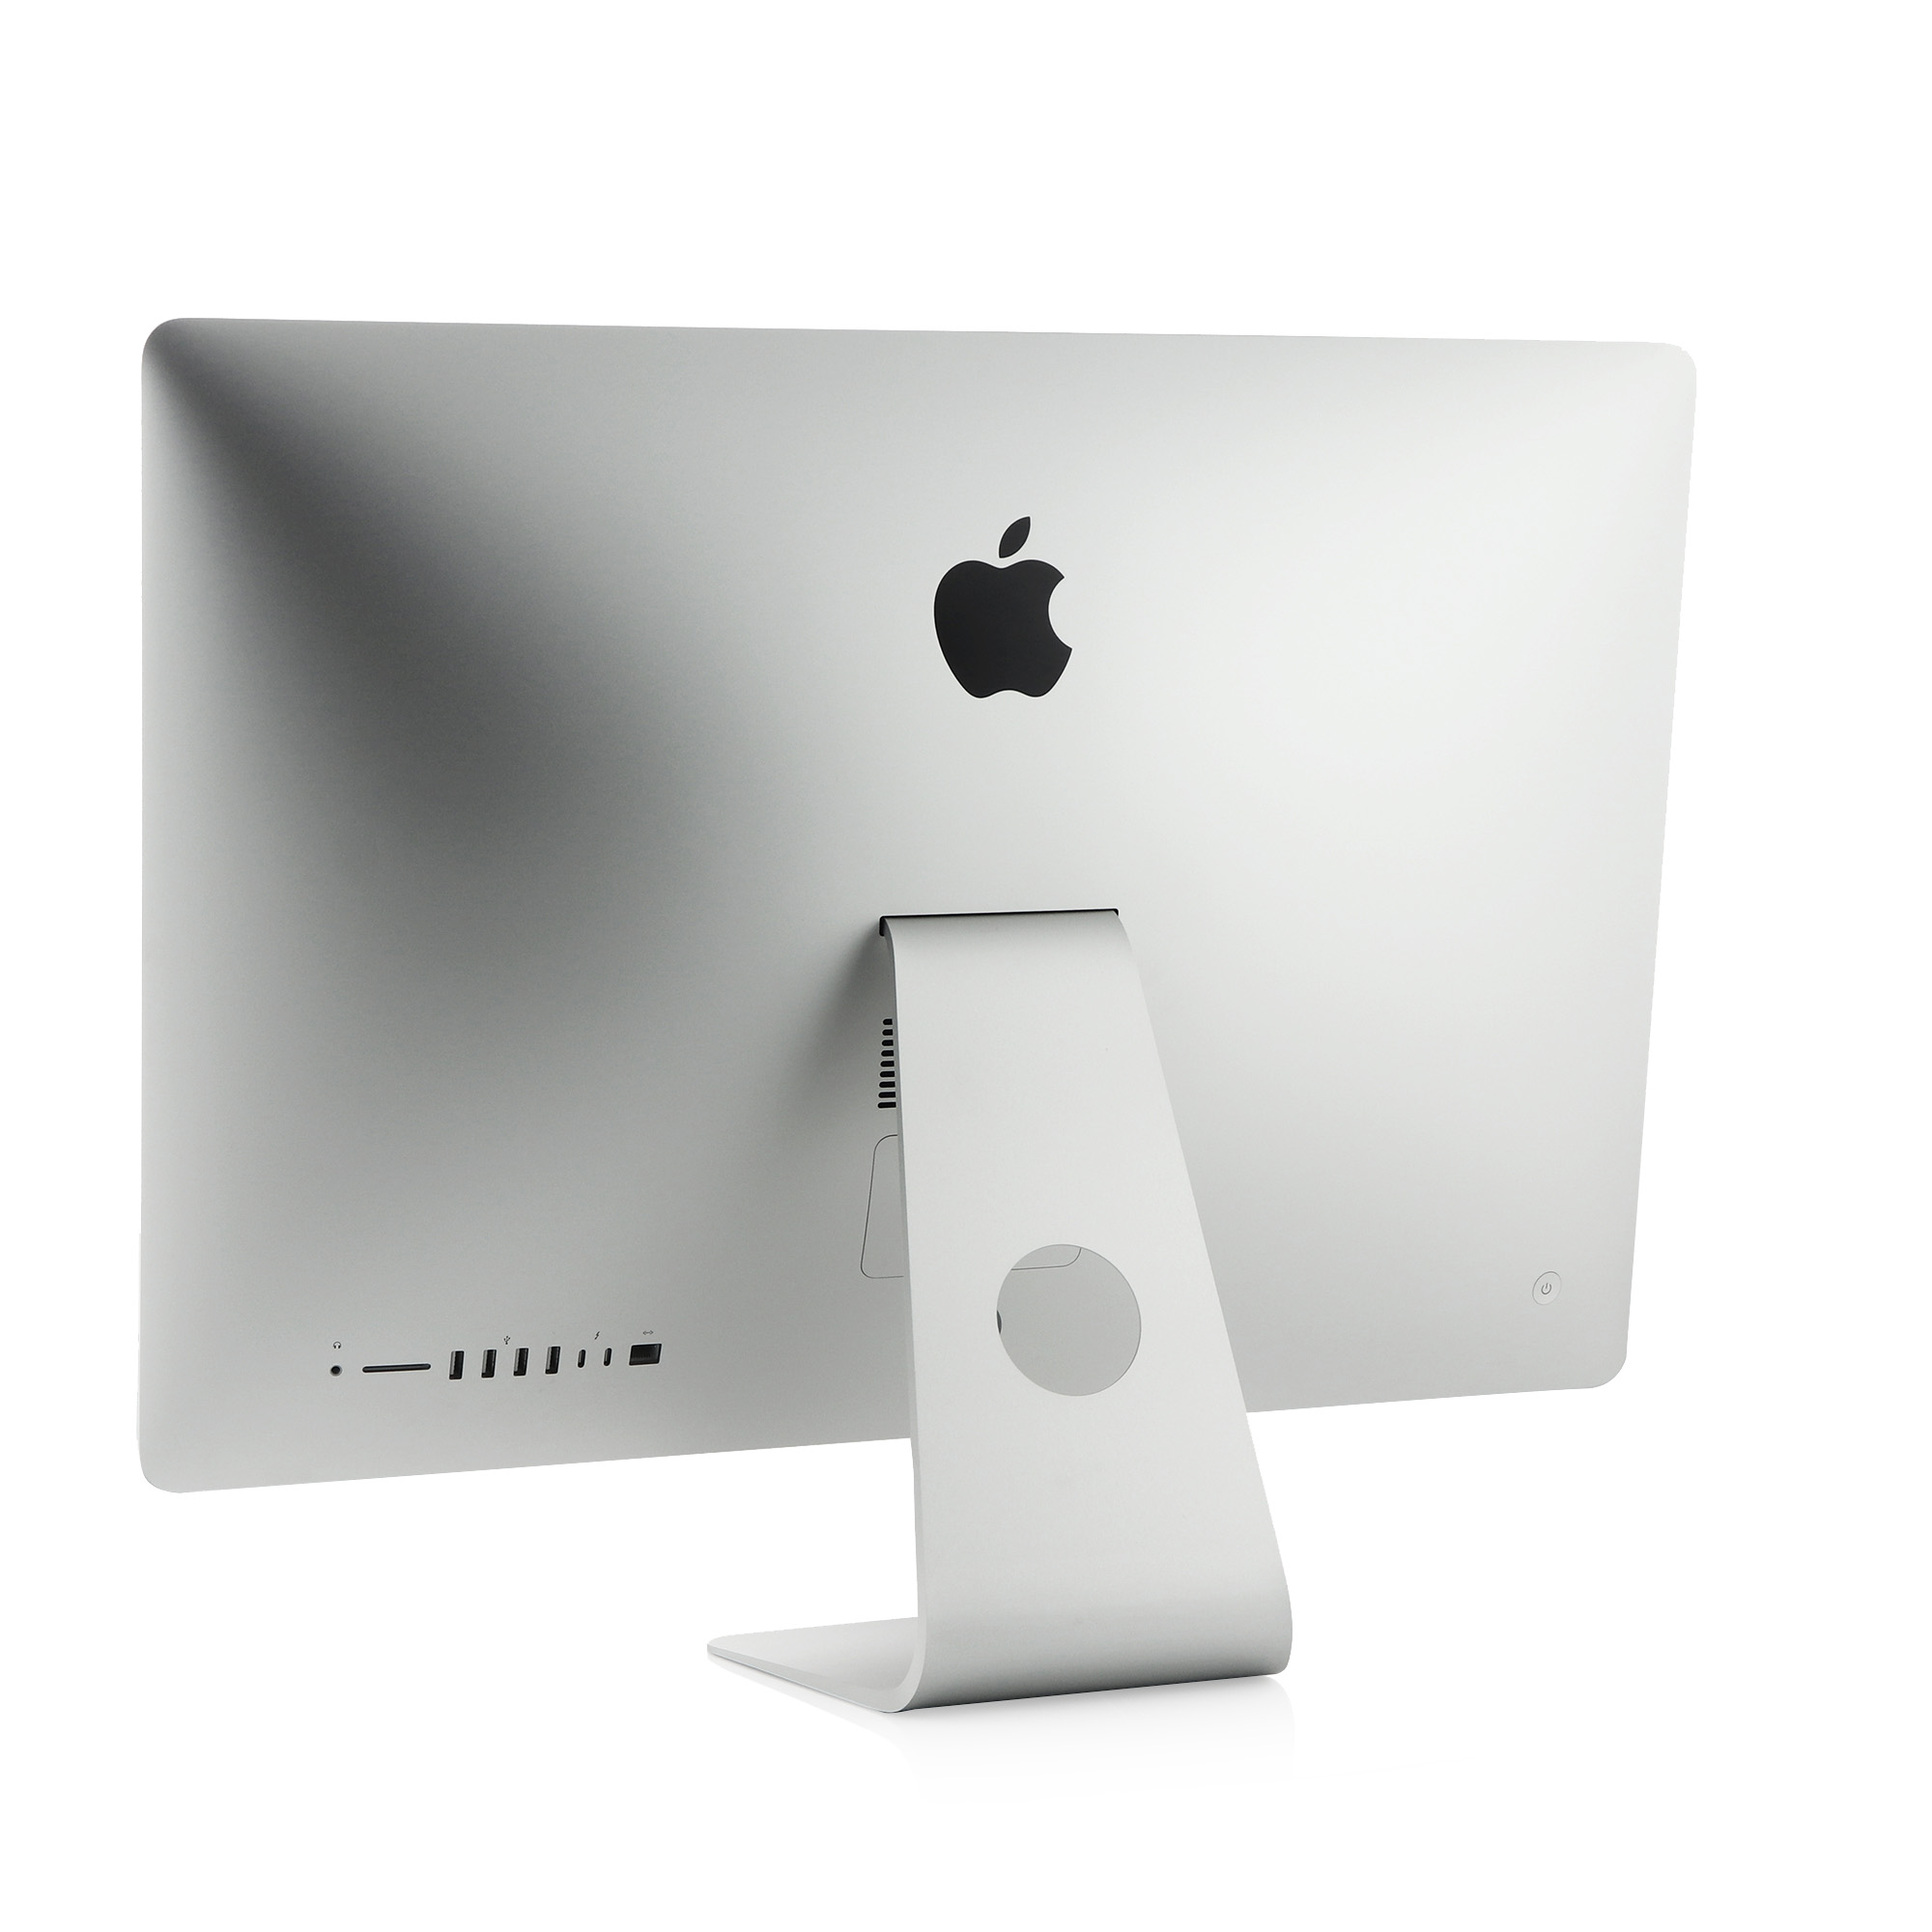 Refurbished 27-inch iMac 3.3GHz 6-core Intel Core i5 with Retina 5K display  - Apple